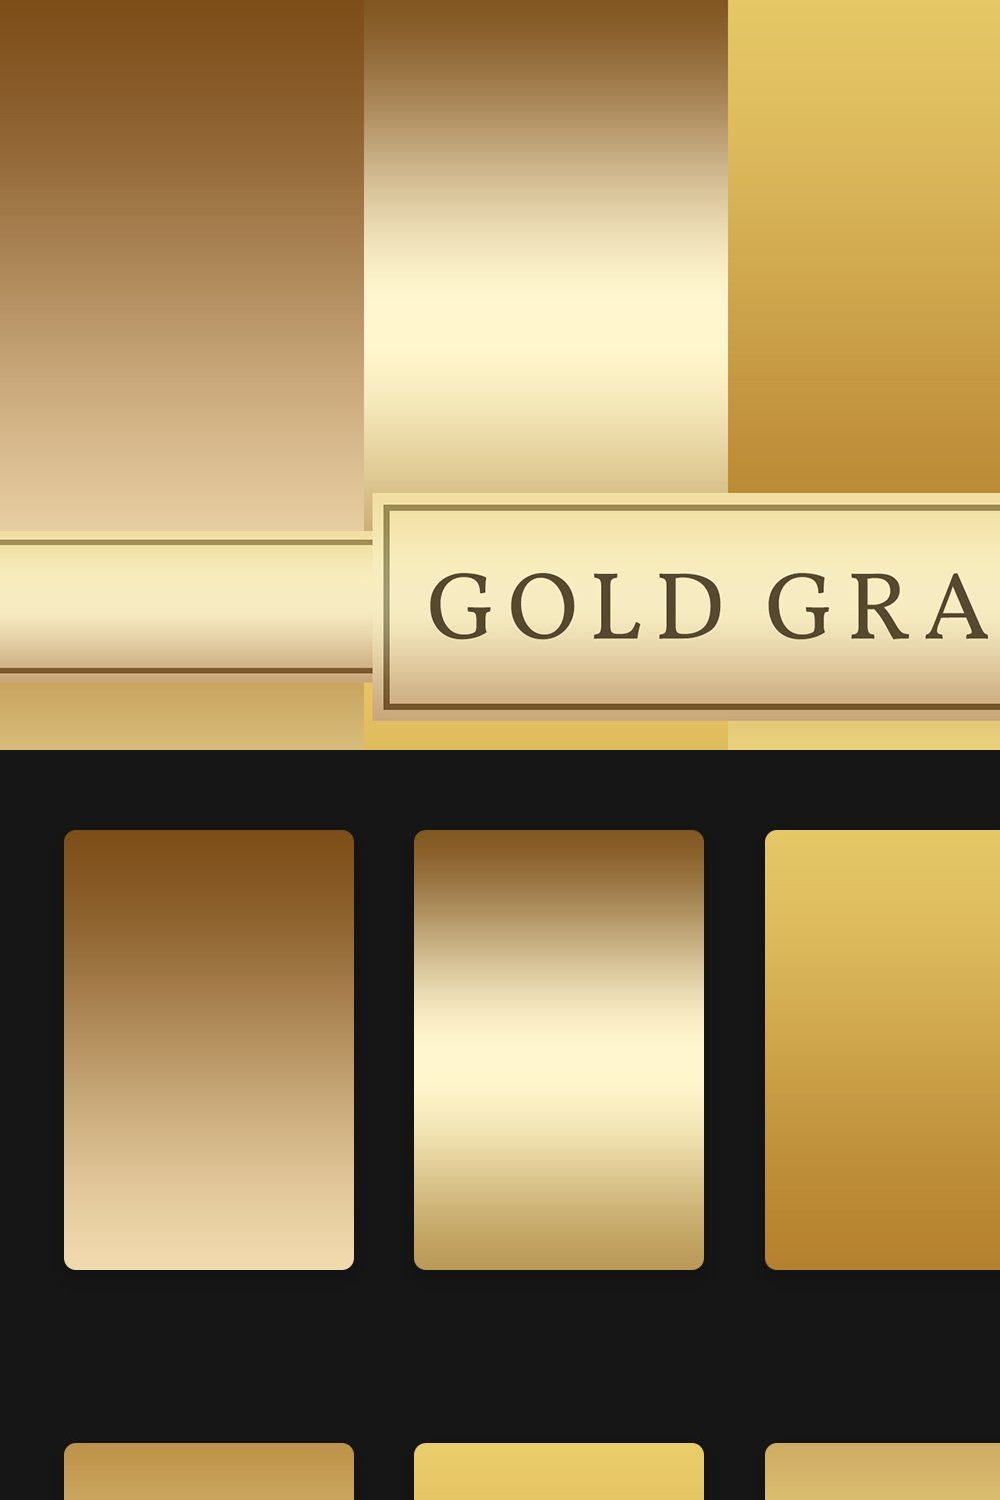 Gold Gradients pinterest preview image.